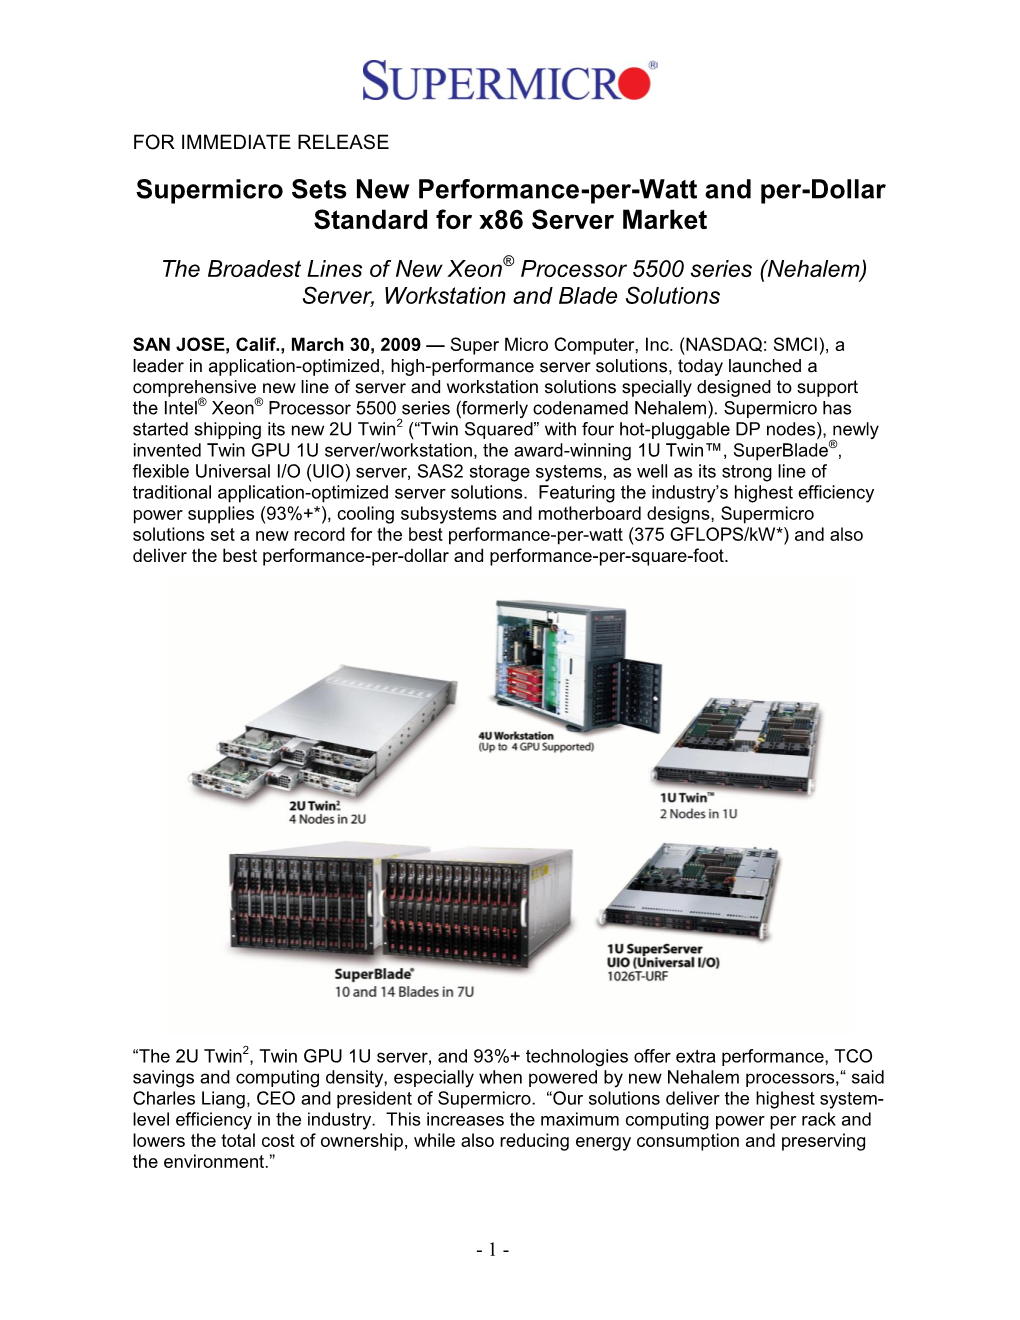 Supermicro Sets New Performance-Per-Watt and Per-Dollar Standard for X86 Server Market